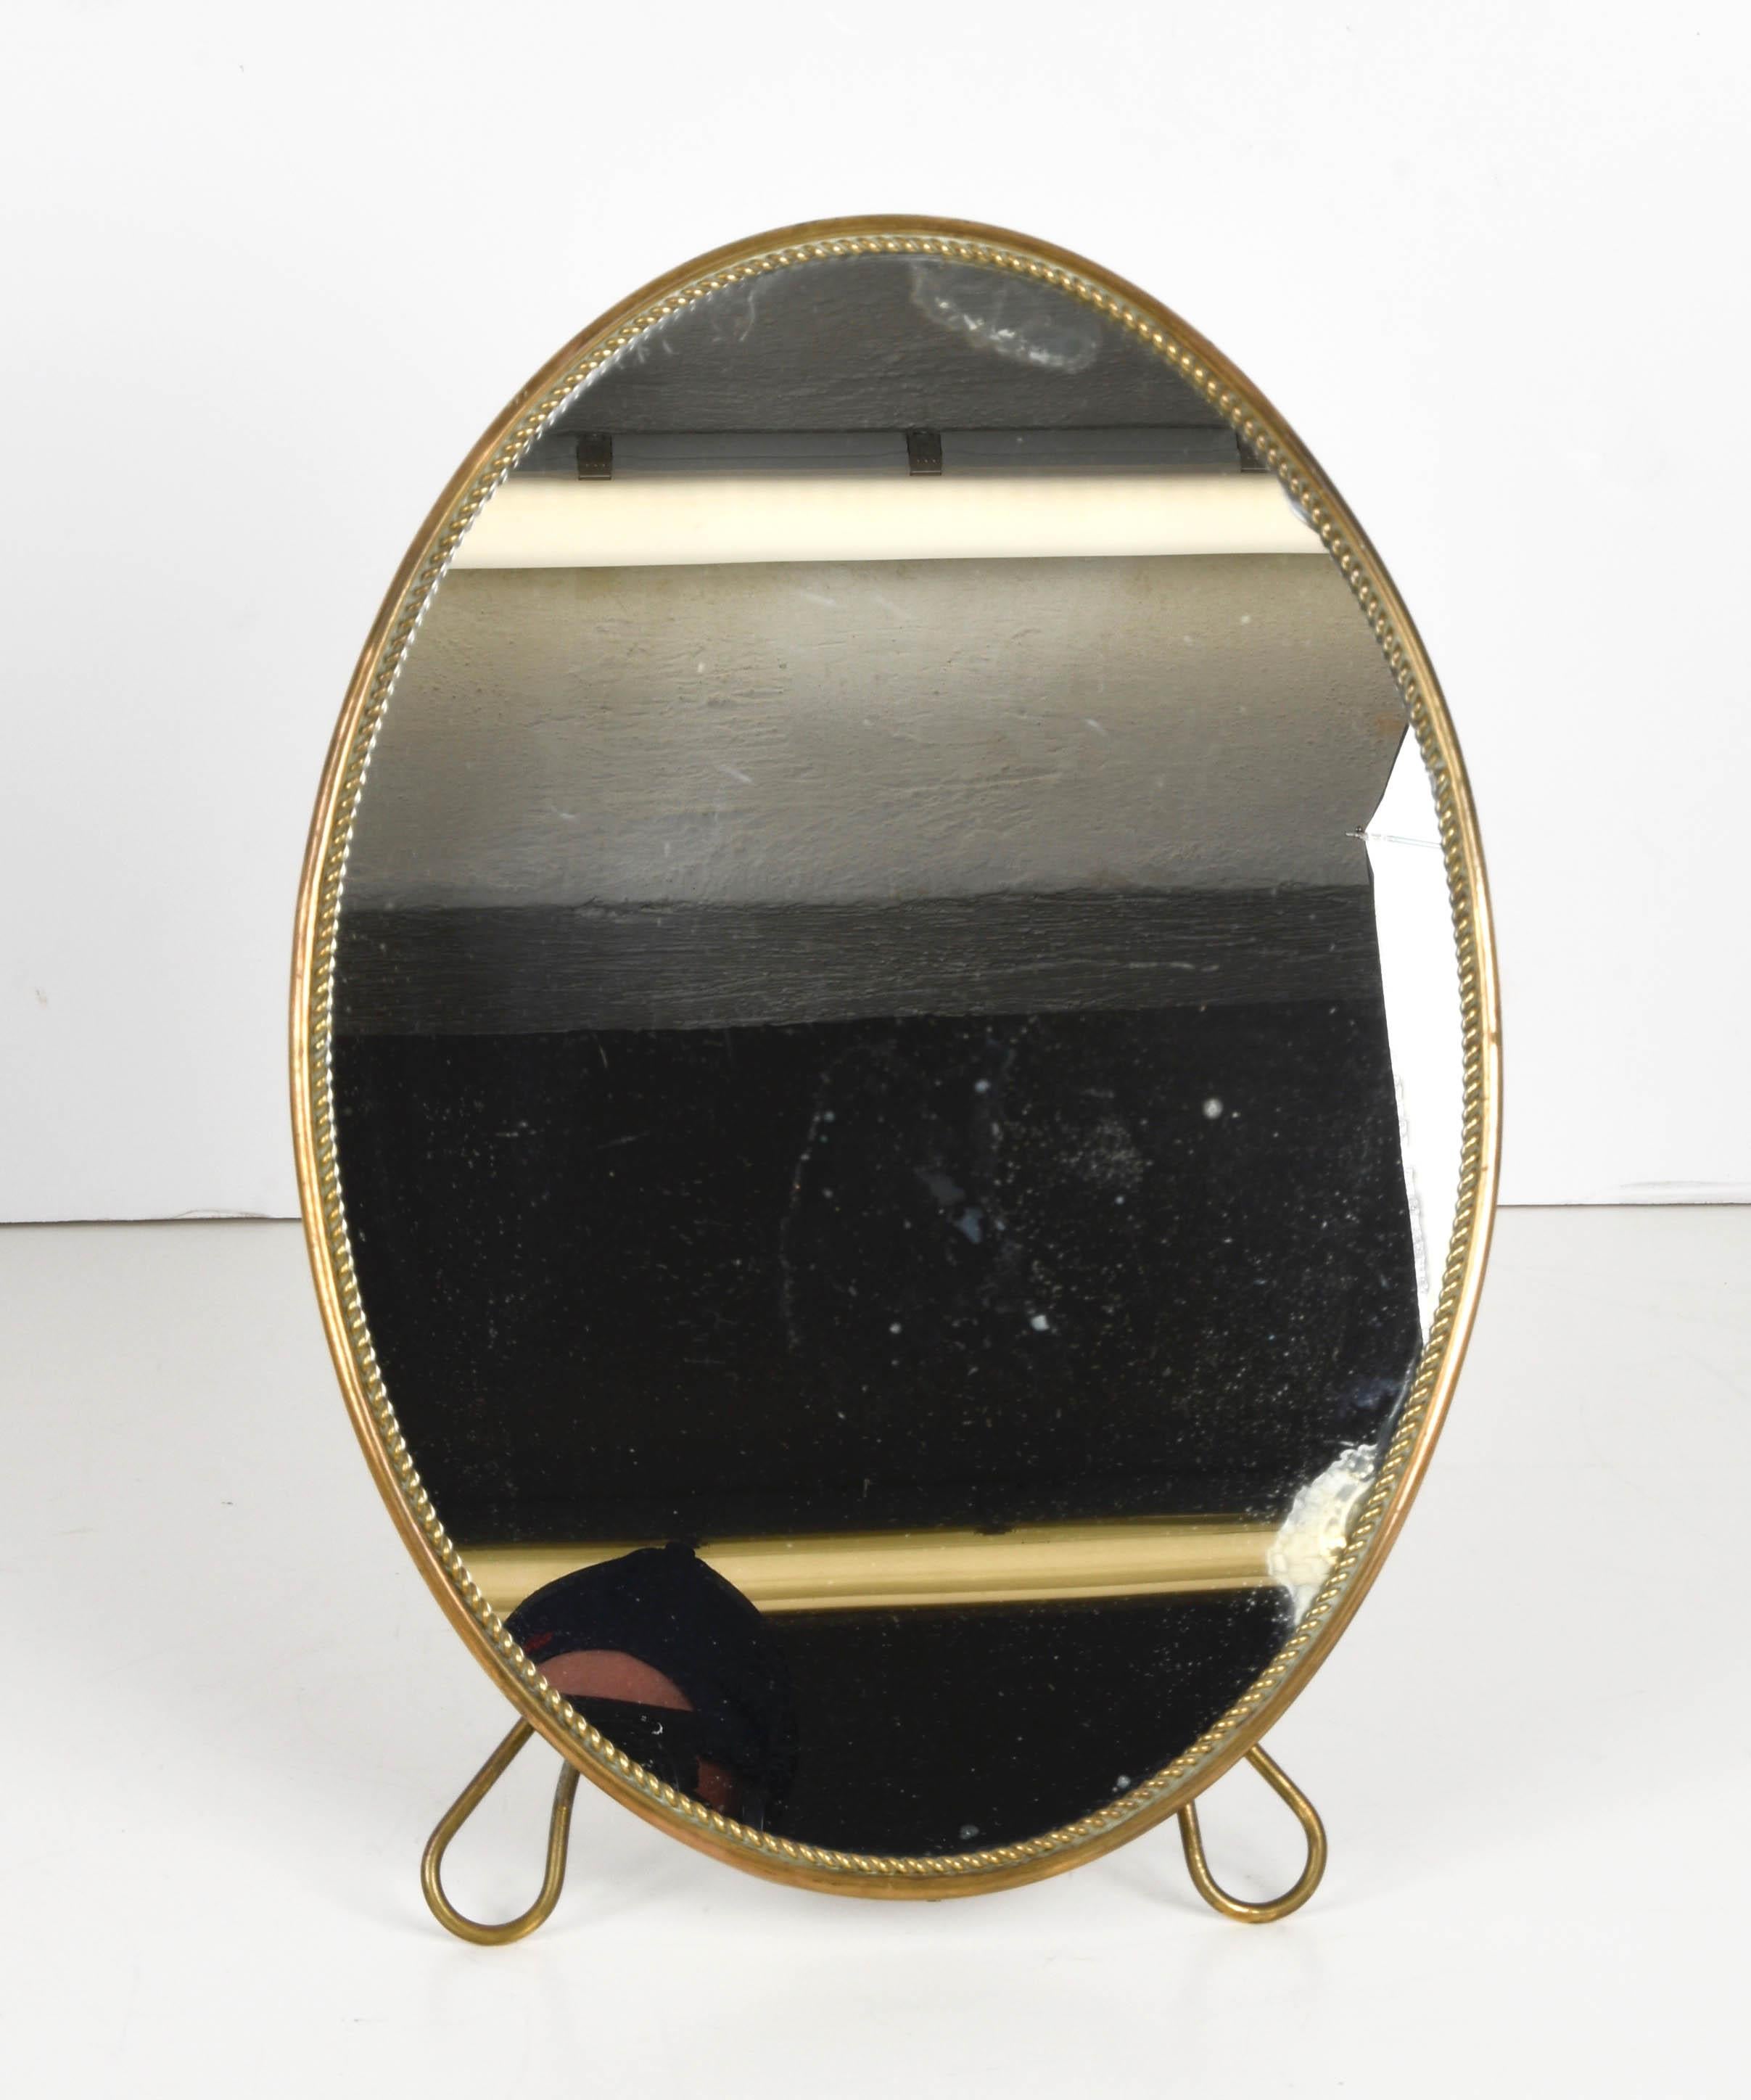 20th Century Midcentury Adjustable Vanity Italian Oval Table Mirror with Brass Frame, 1950s